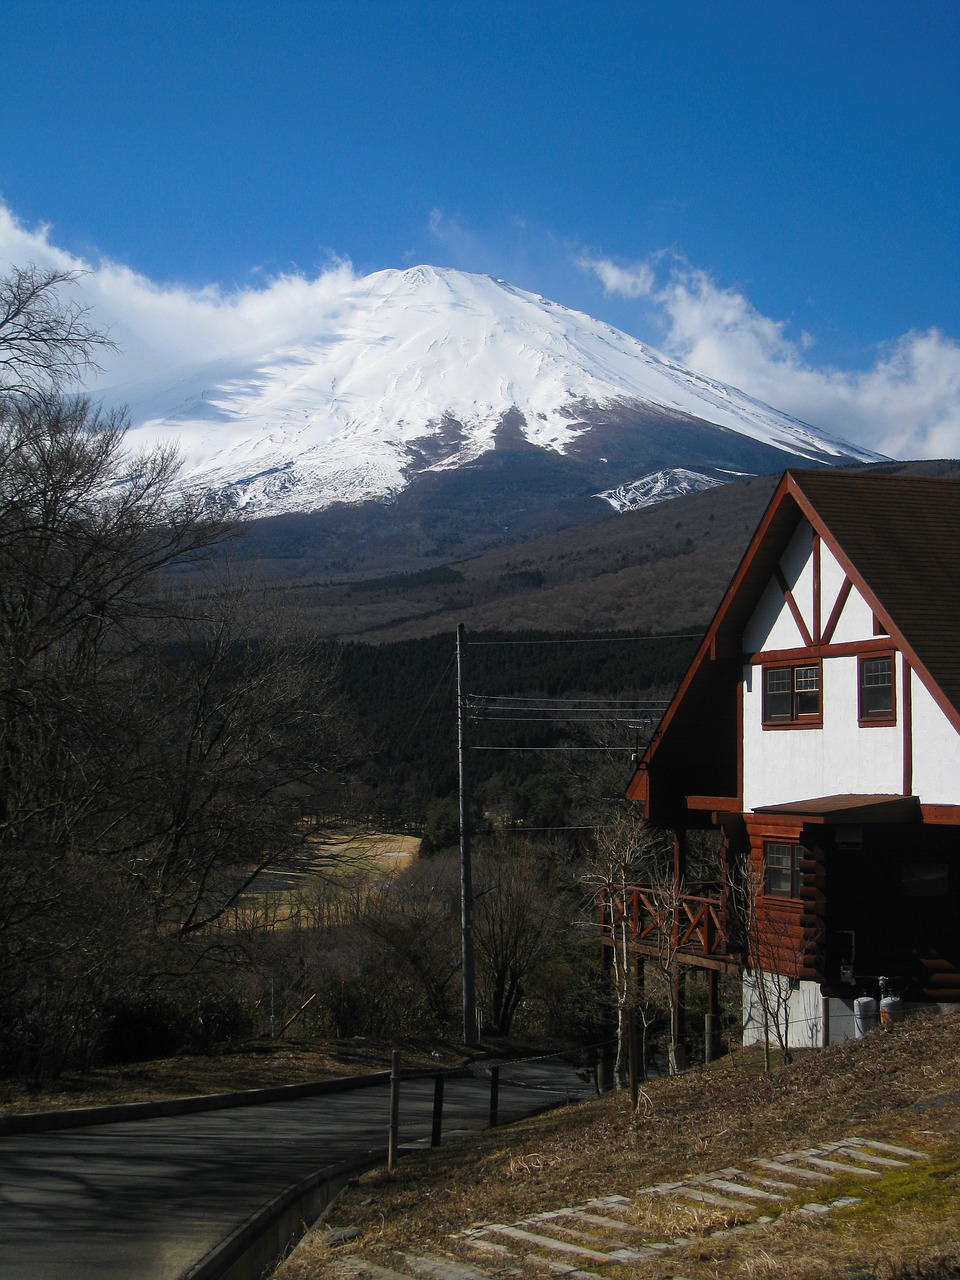 Mt Fuji, Vila, Kalnų Namelis, Žiema, Sniegas, Mėlynas Dangus, Debesis, Balta, Mėlynas, Miškas